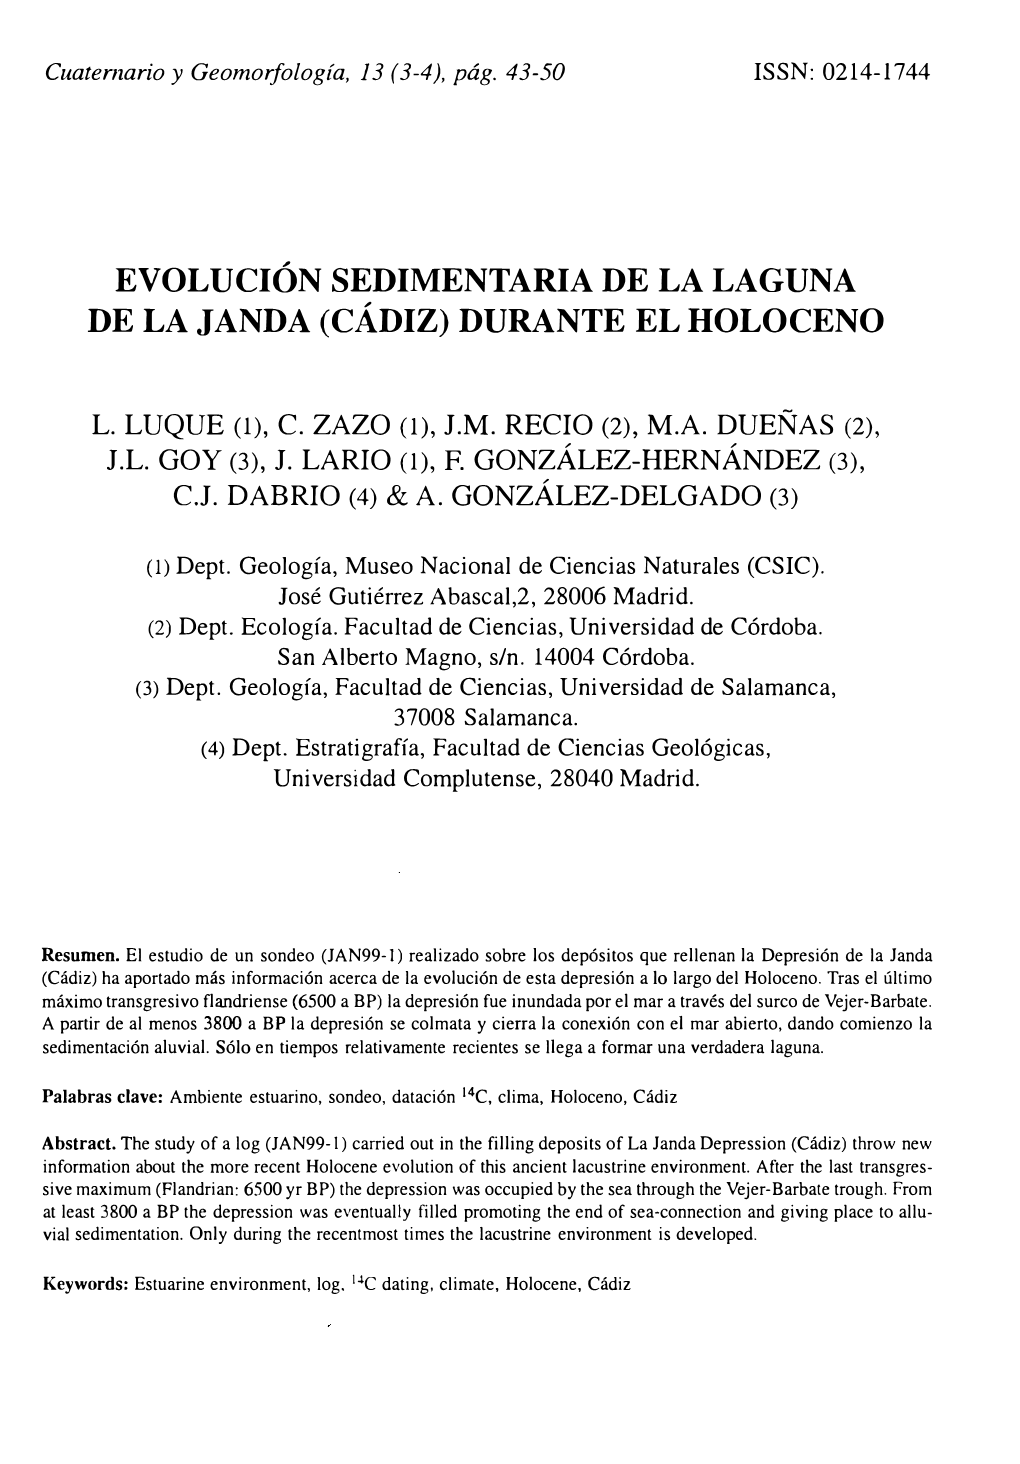 Evolucion Sedimentaria De La Laguna De La Janda (Cadiz) Durante El Holoceno